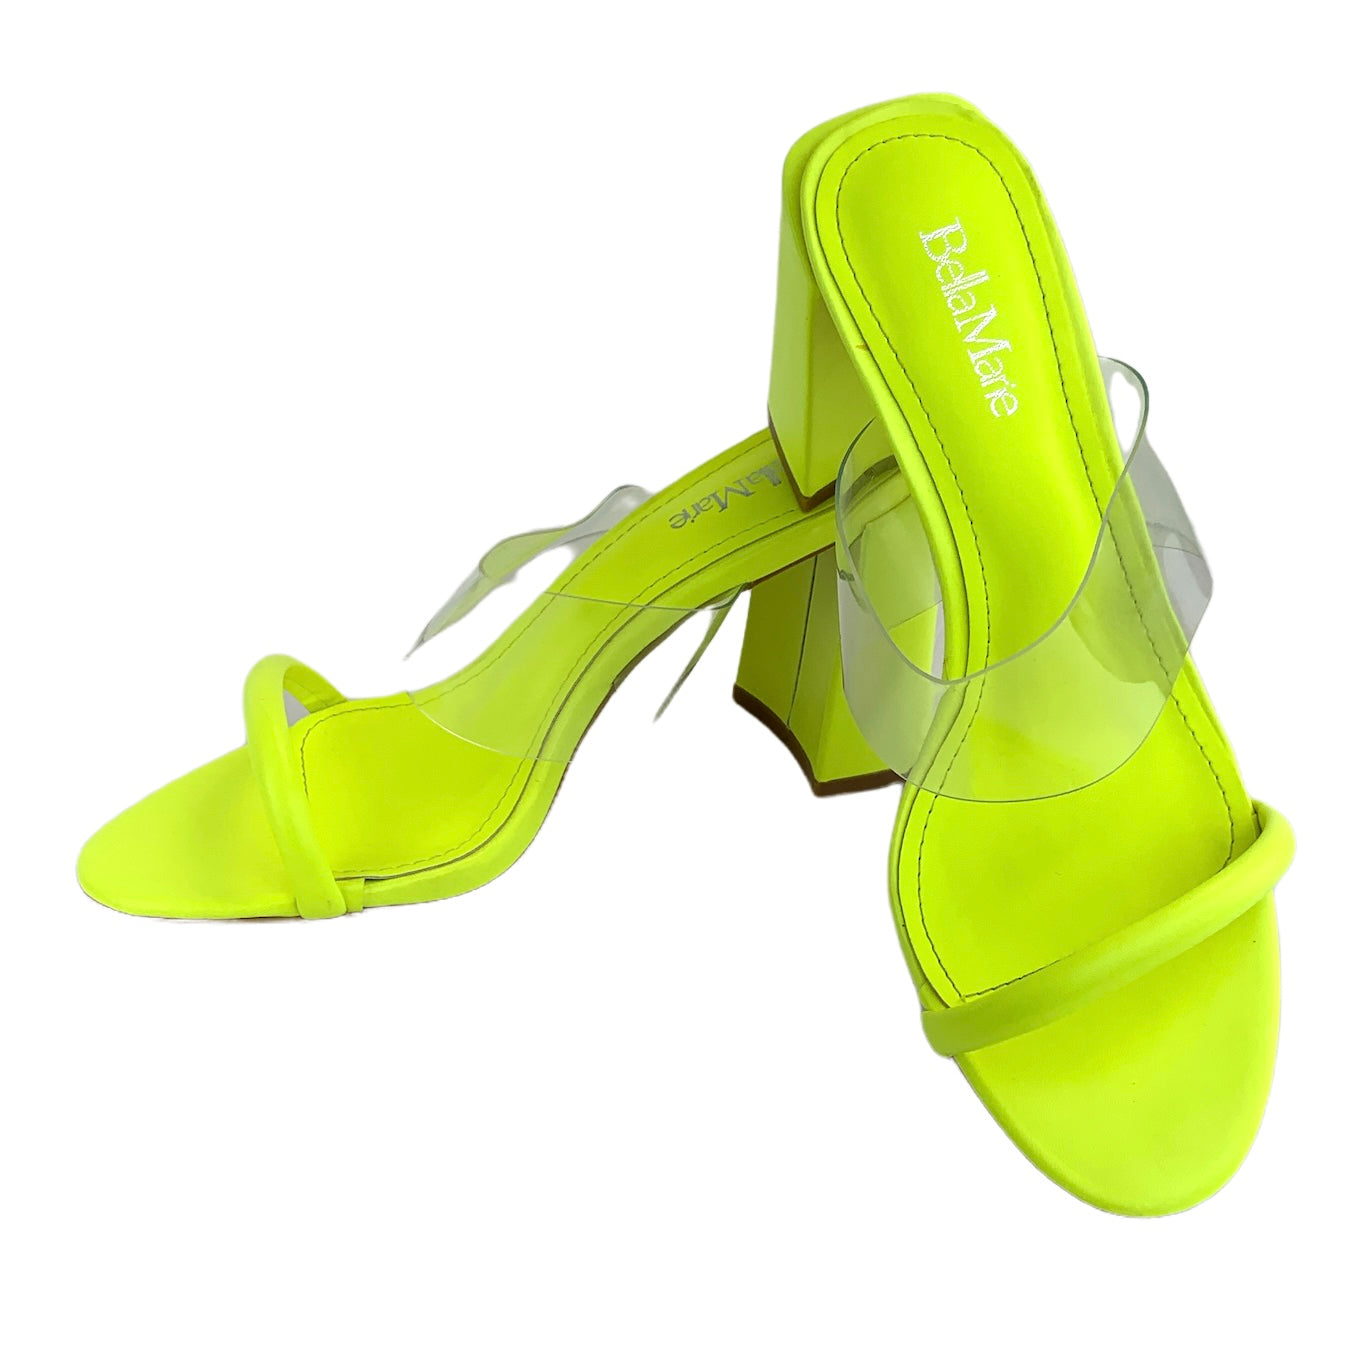 LOUNGE-1 Neon/Clear Slip On Block Heel Size 9 Fashion Women's Sandals